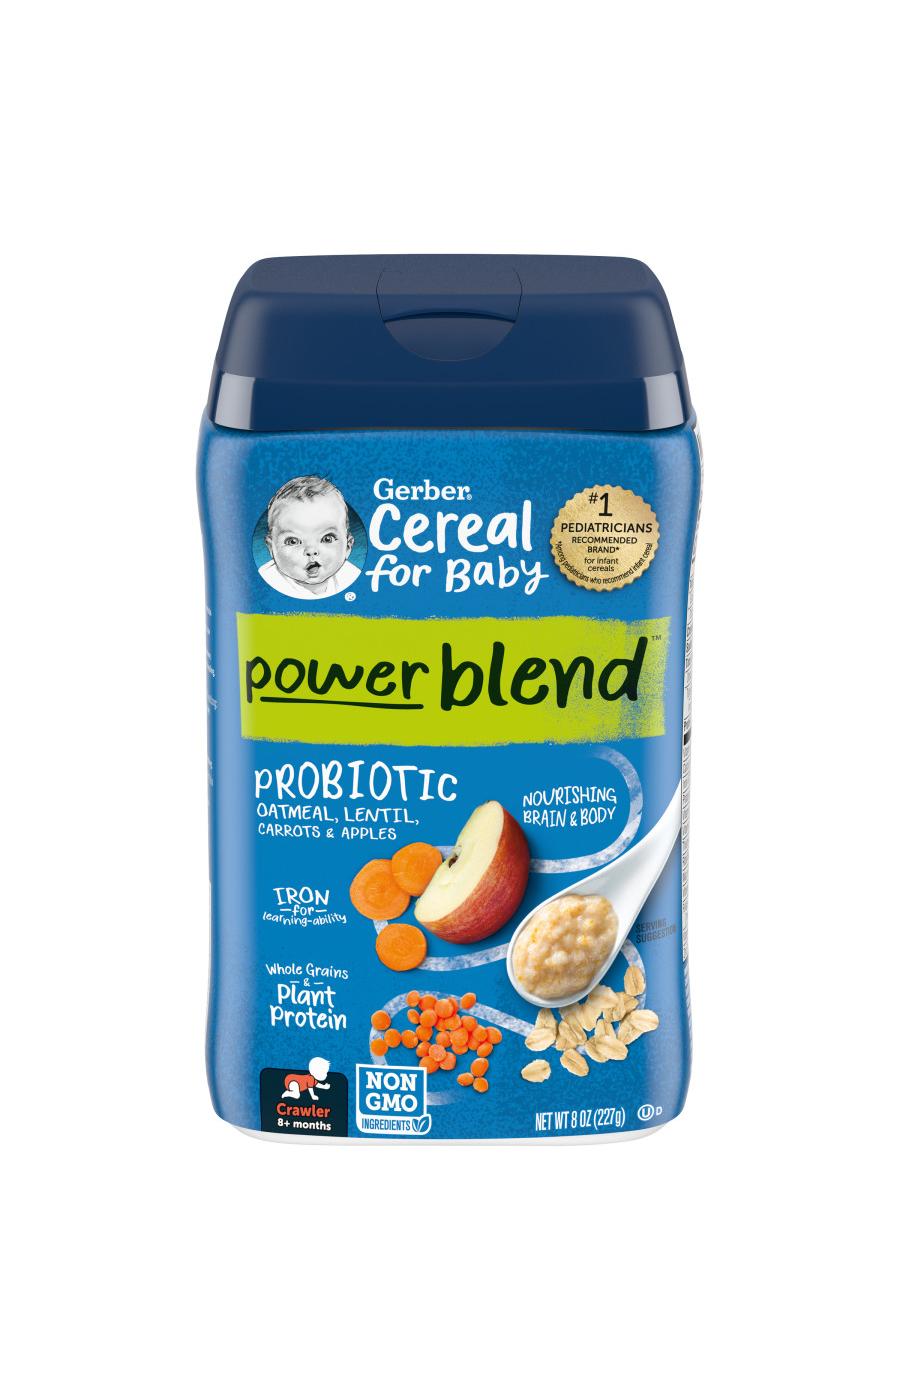 Gerber Cereal for Baby PowerBlend Probiotic - Oatmeal Lentil Carrots & Apples; image 1 of 8